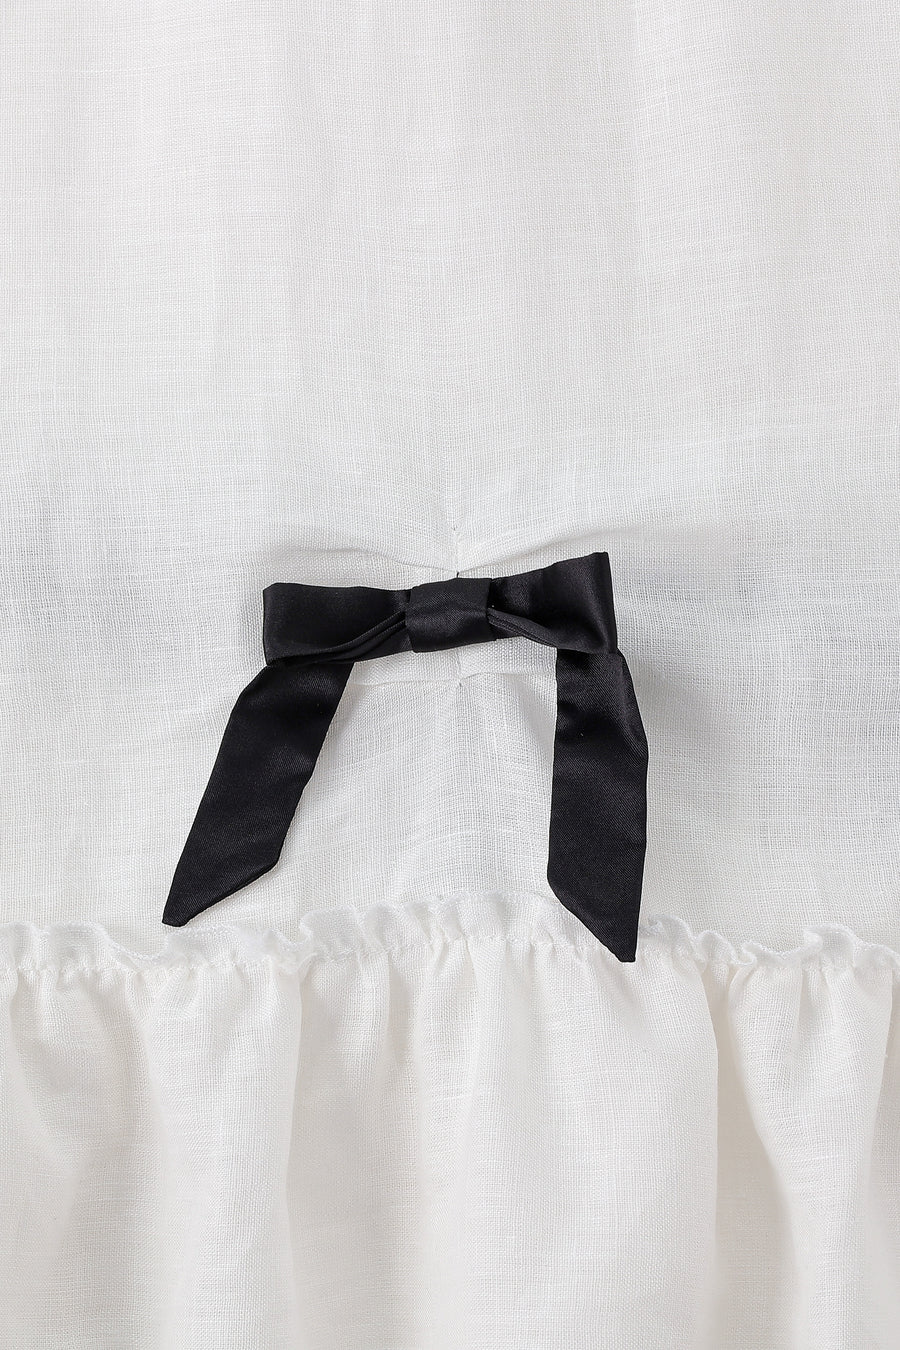 Fancy Lady White Linen Petticoat Bows Skirt